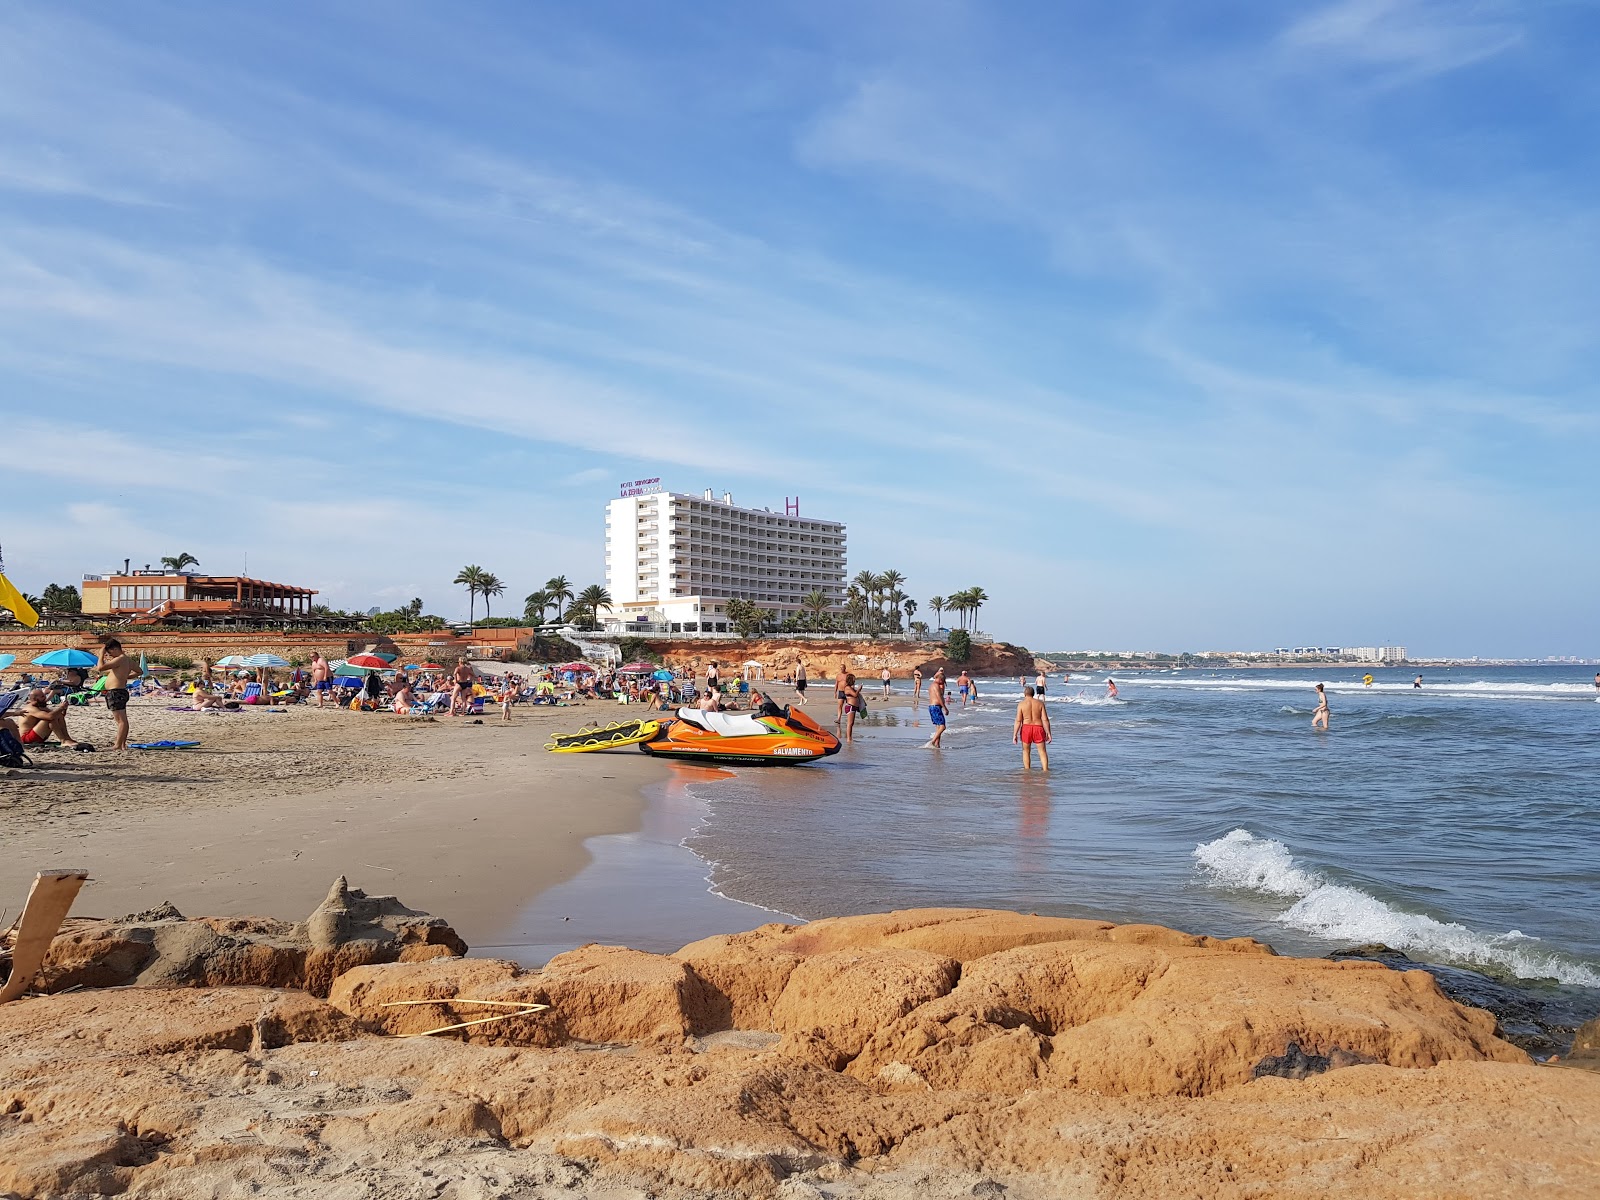 Foto de Playa la Zenia com alto nível de limpeza